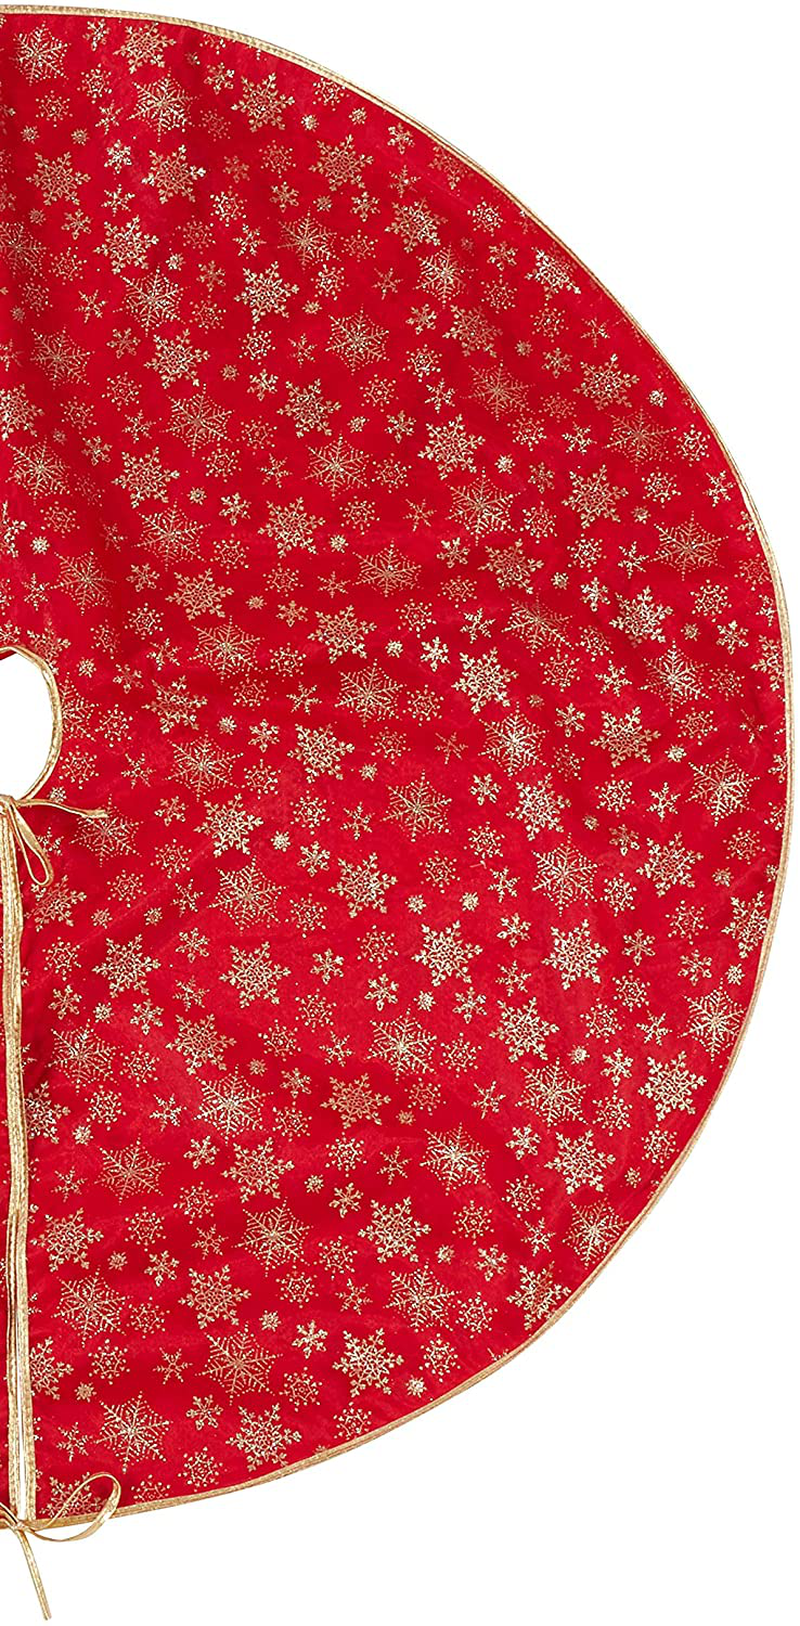 SARO LIFESTYLE Flocon de Neige Collection Red Organza Christmas Tree Skirt with Gold Snowflake Design, 48" Home & Garden > Decor > Seasonal & Holiday Decorations > Christmas Tree Skirts SARO LIFESTYLE   